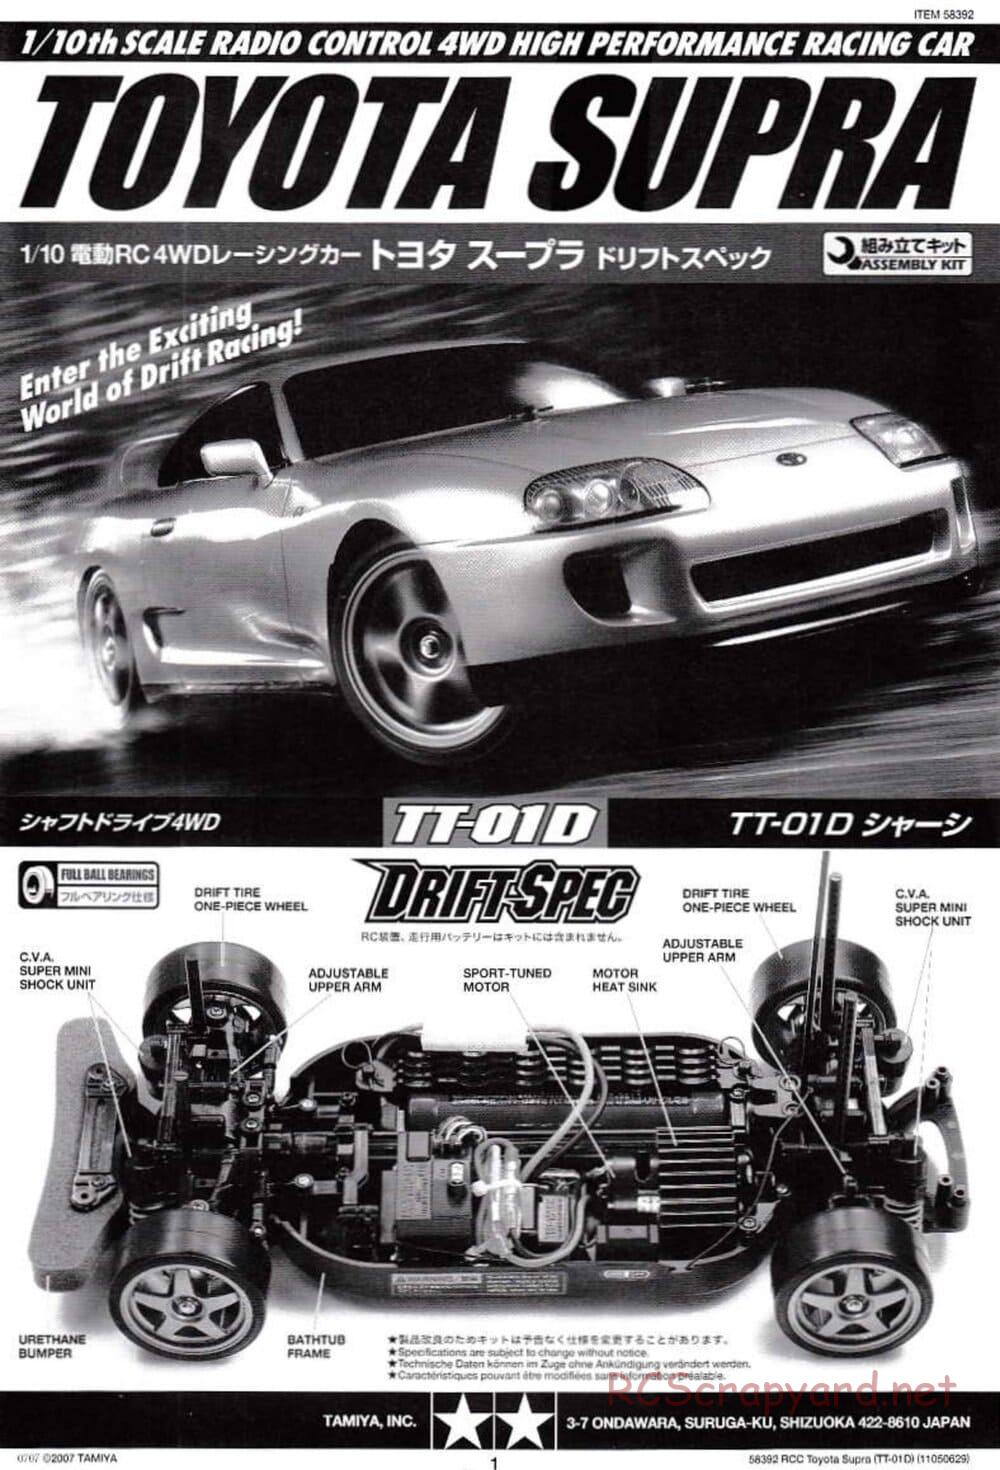 Tamiya - Toyota Supra - Drift Spec - TT-01D Chassis - Manual - Page 1